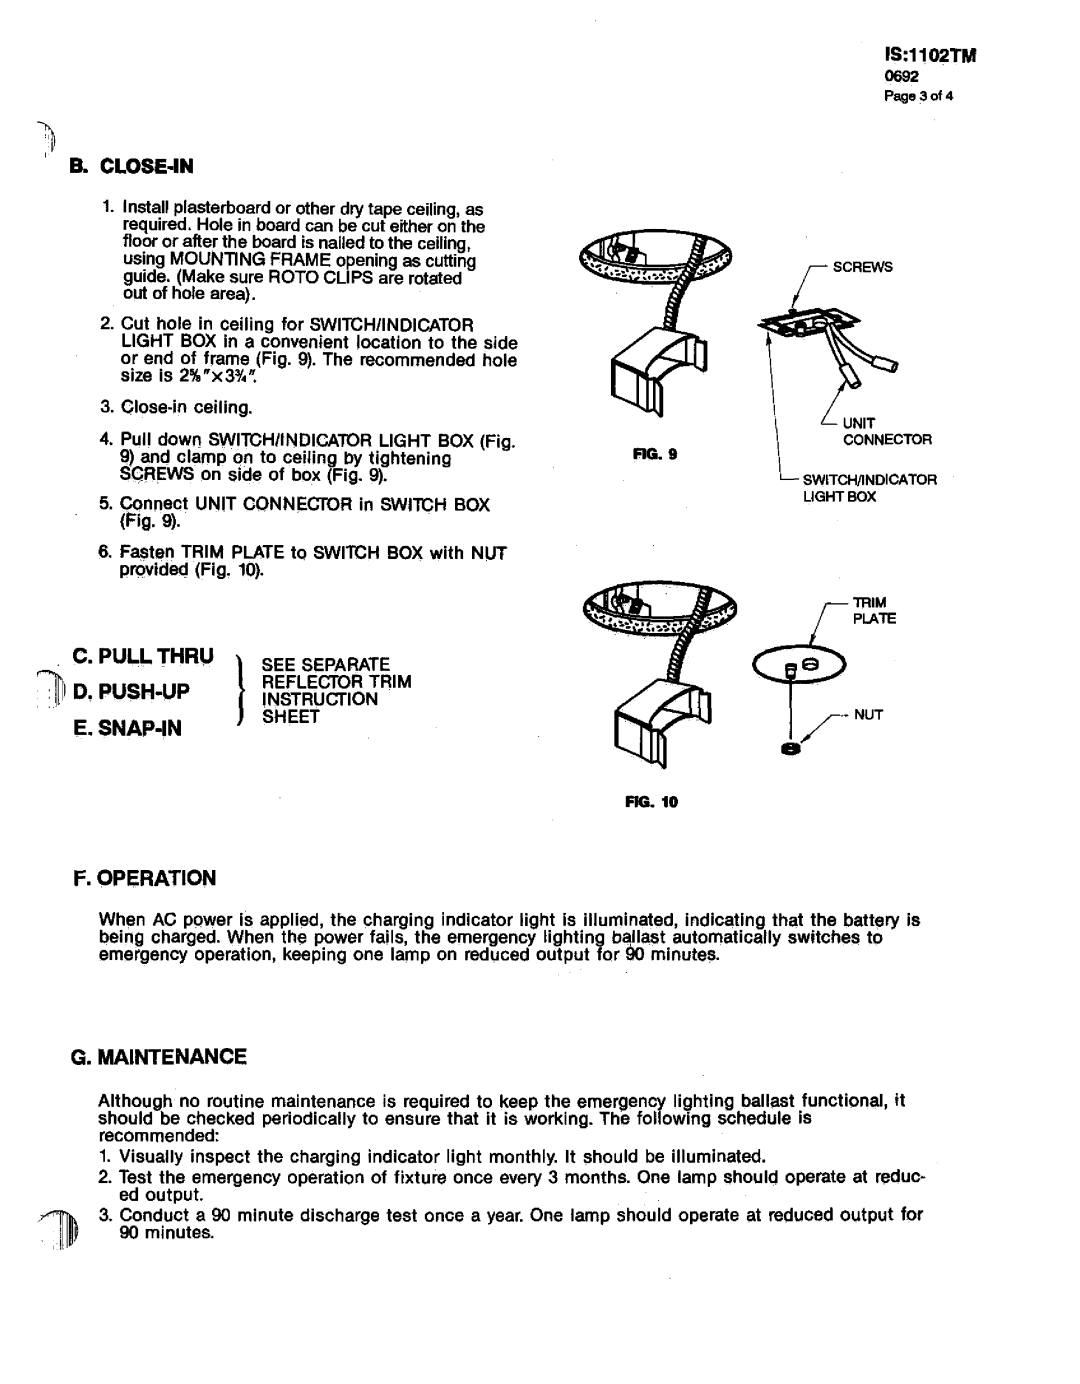 Lightolier 1102TM instruction sheet ~ D. Push-Up, lS ll~TM, F.Operation, G. Maintenance, B.Close-In, E. Snap-In 